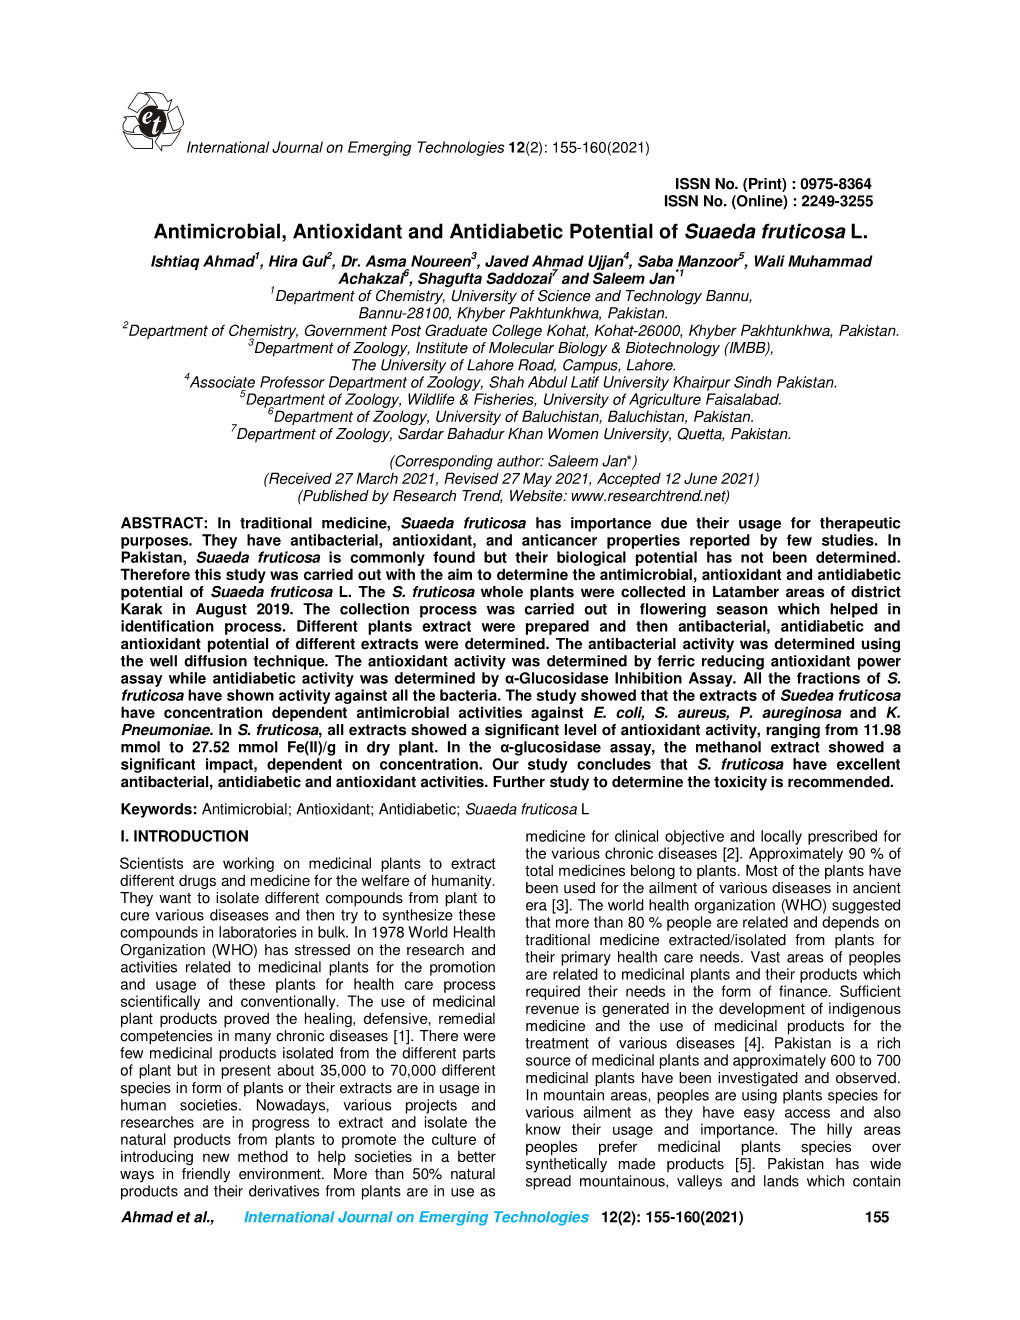 Antimicrobial, Antioxidant and Antidiabetic Potential of Suaeda Fruticosa L